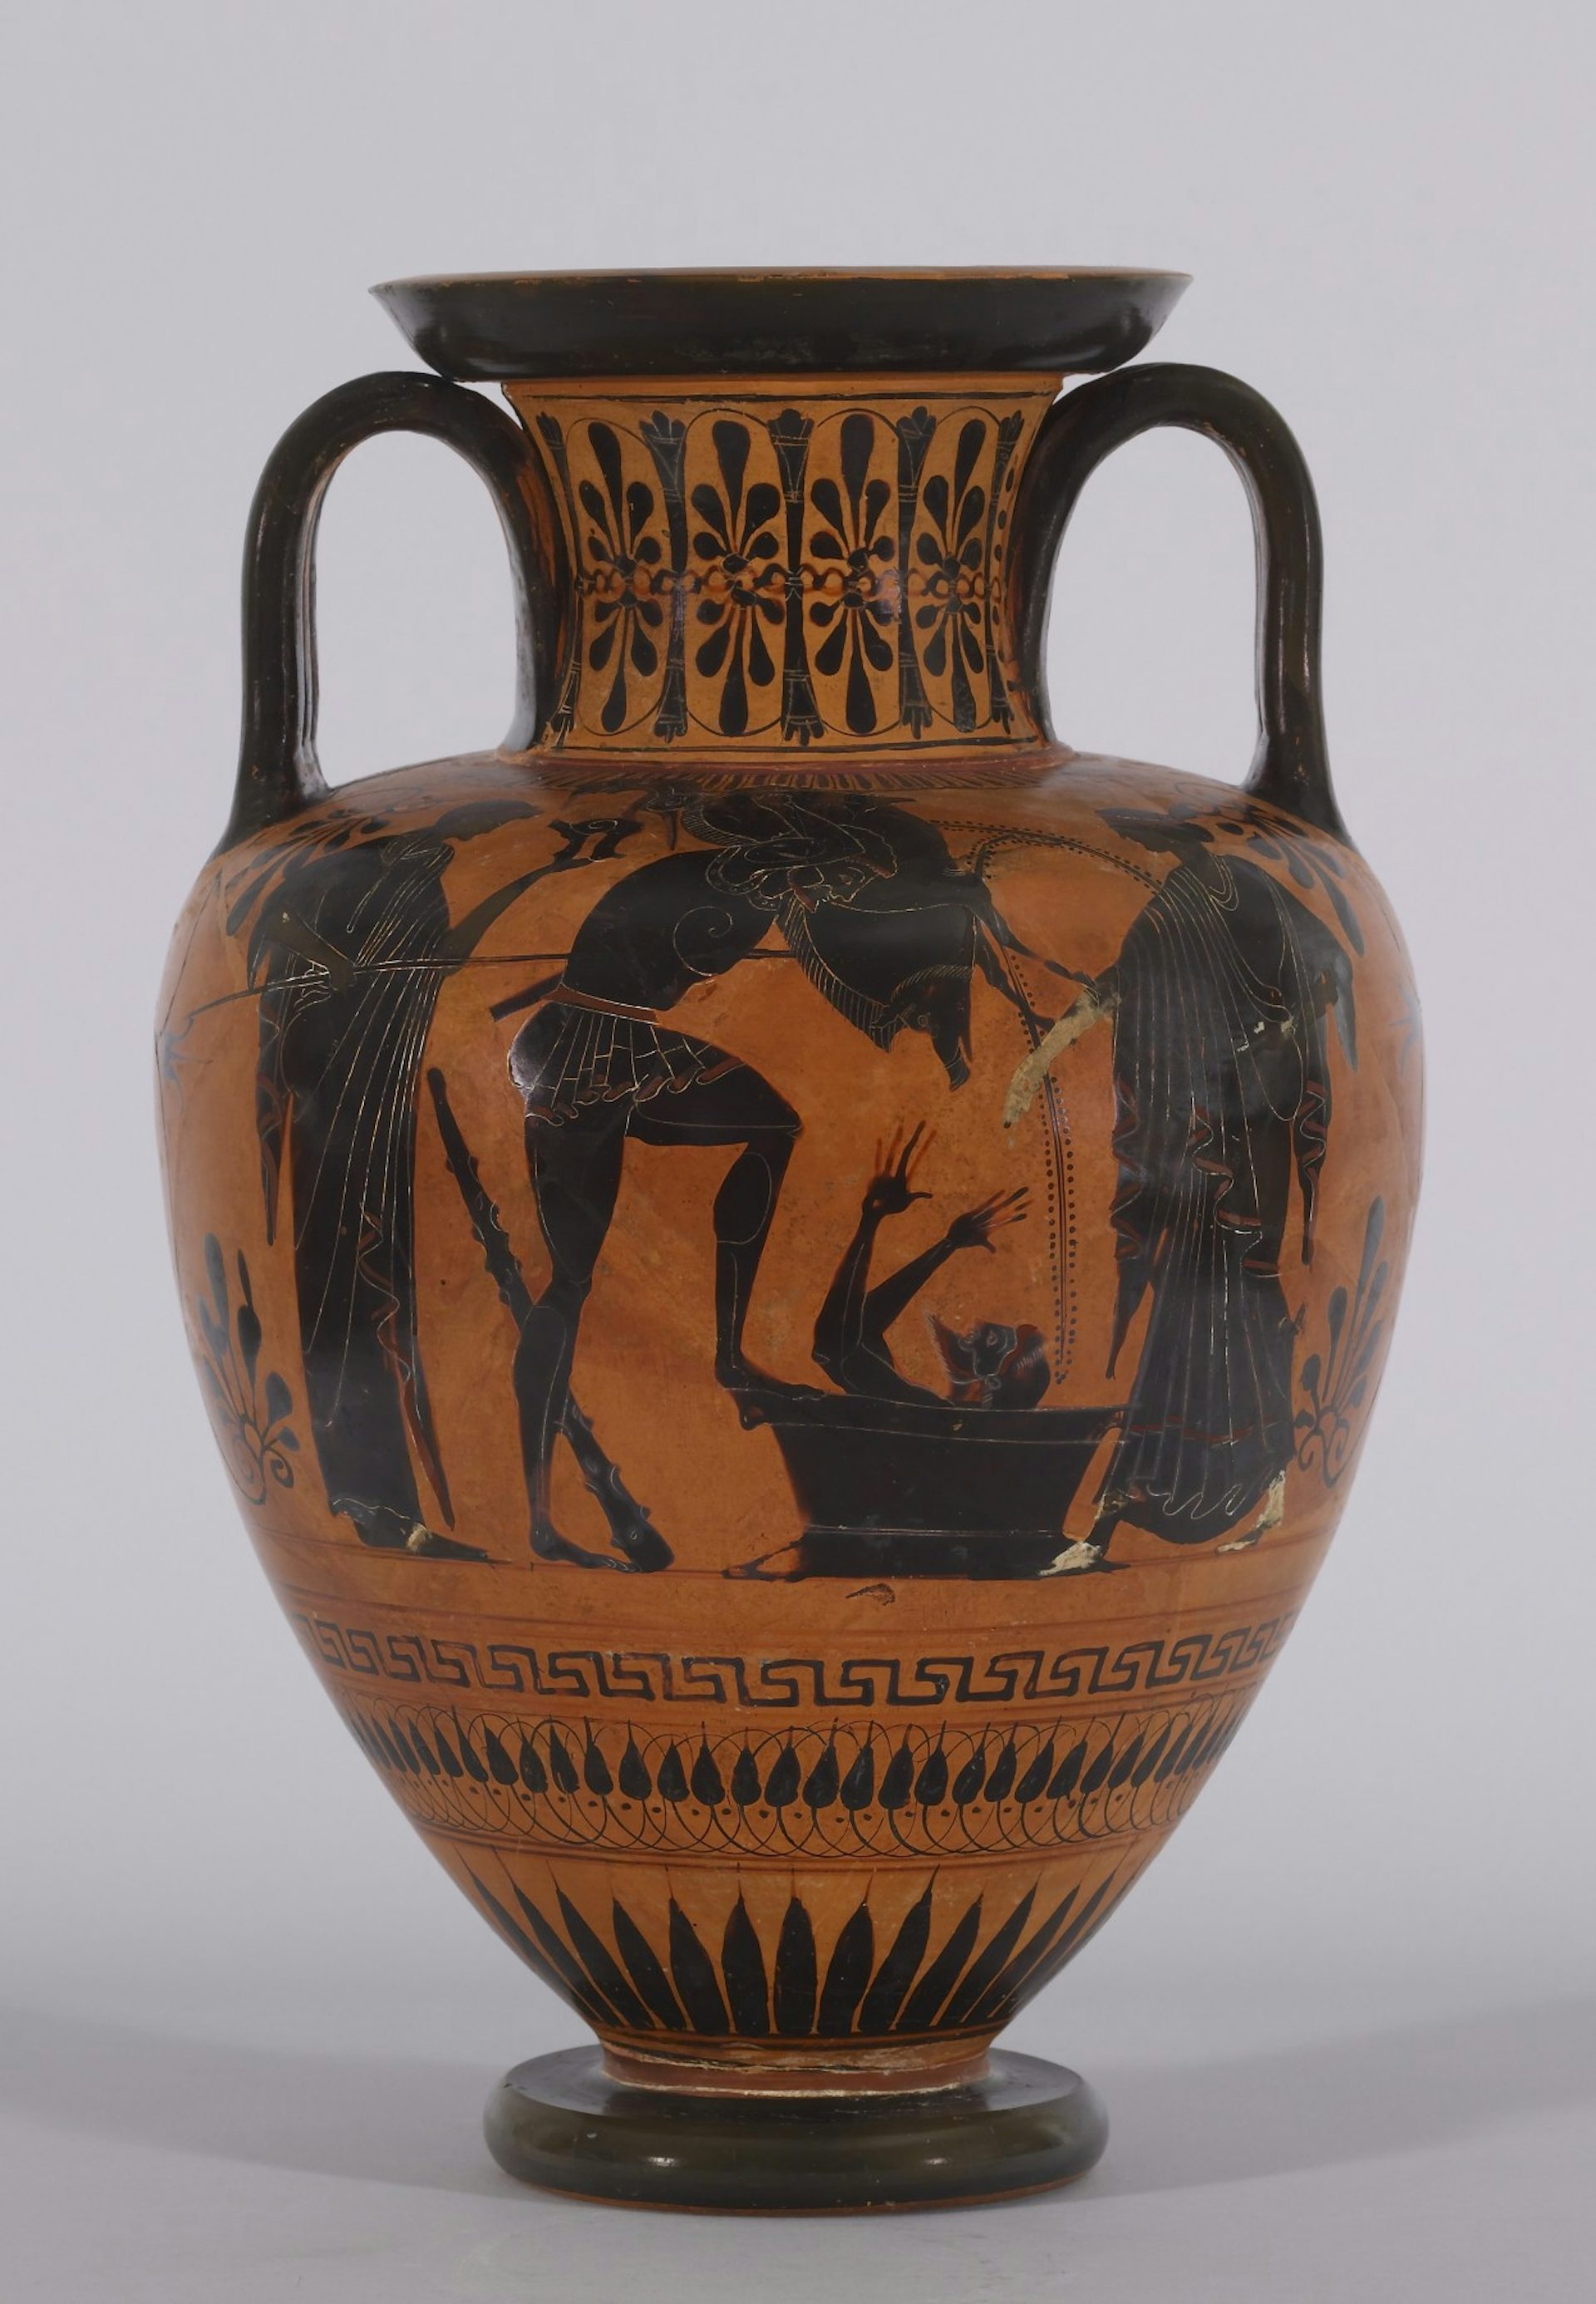 Black-figure neck amphora with Heracles Erymanthian Boar and Eurystheus circa 520 BCE